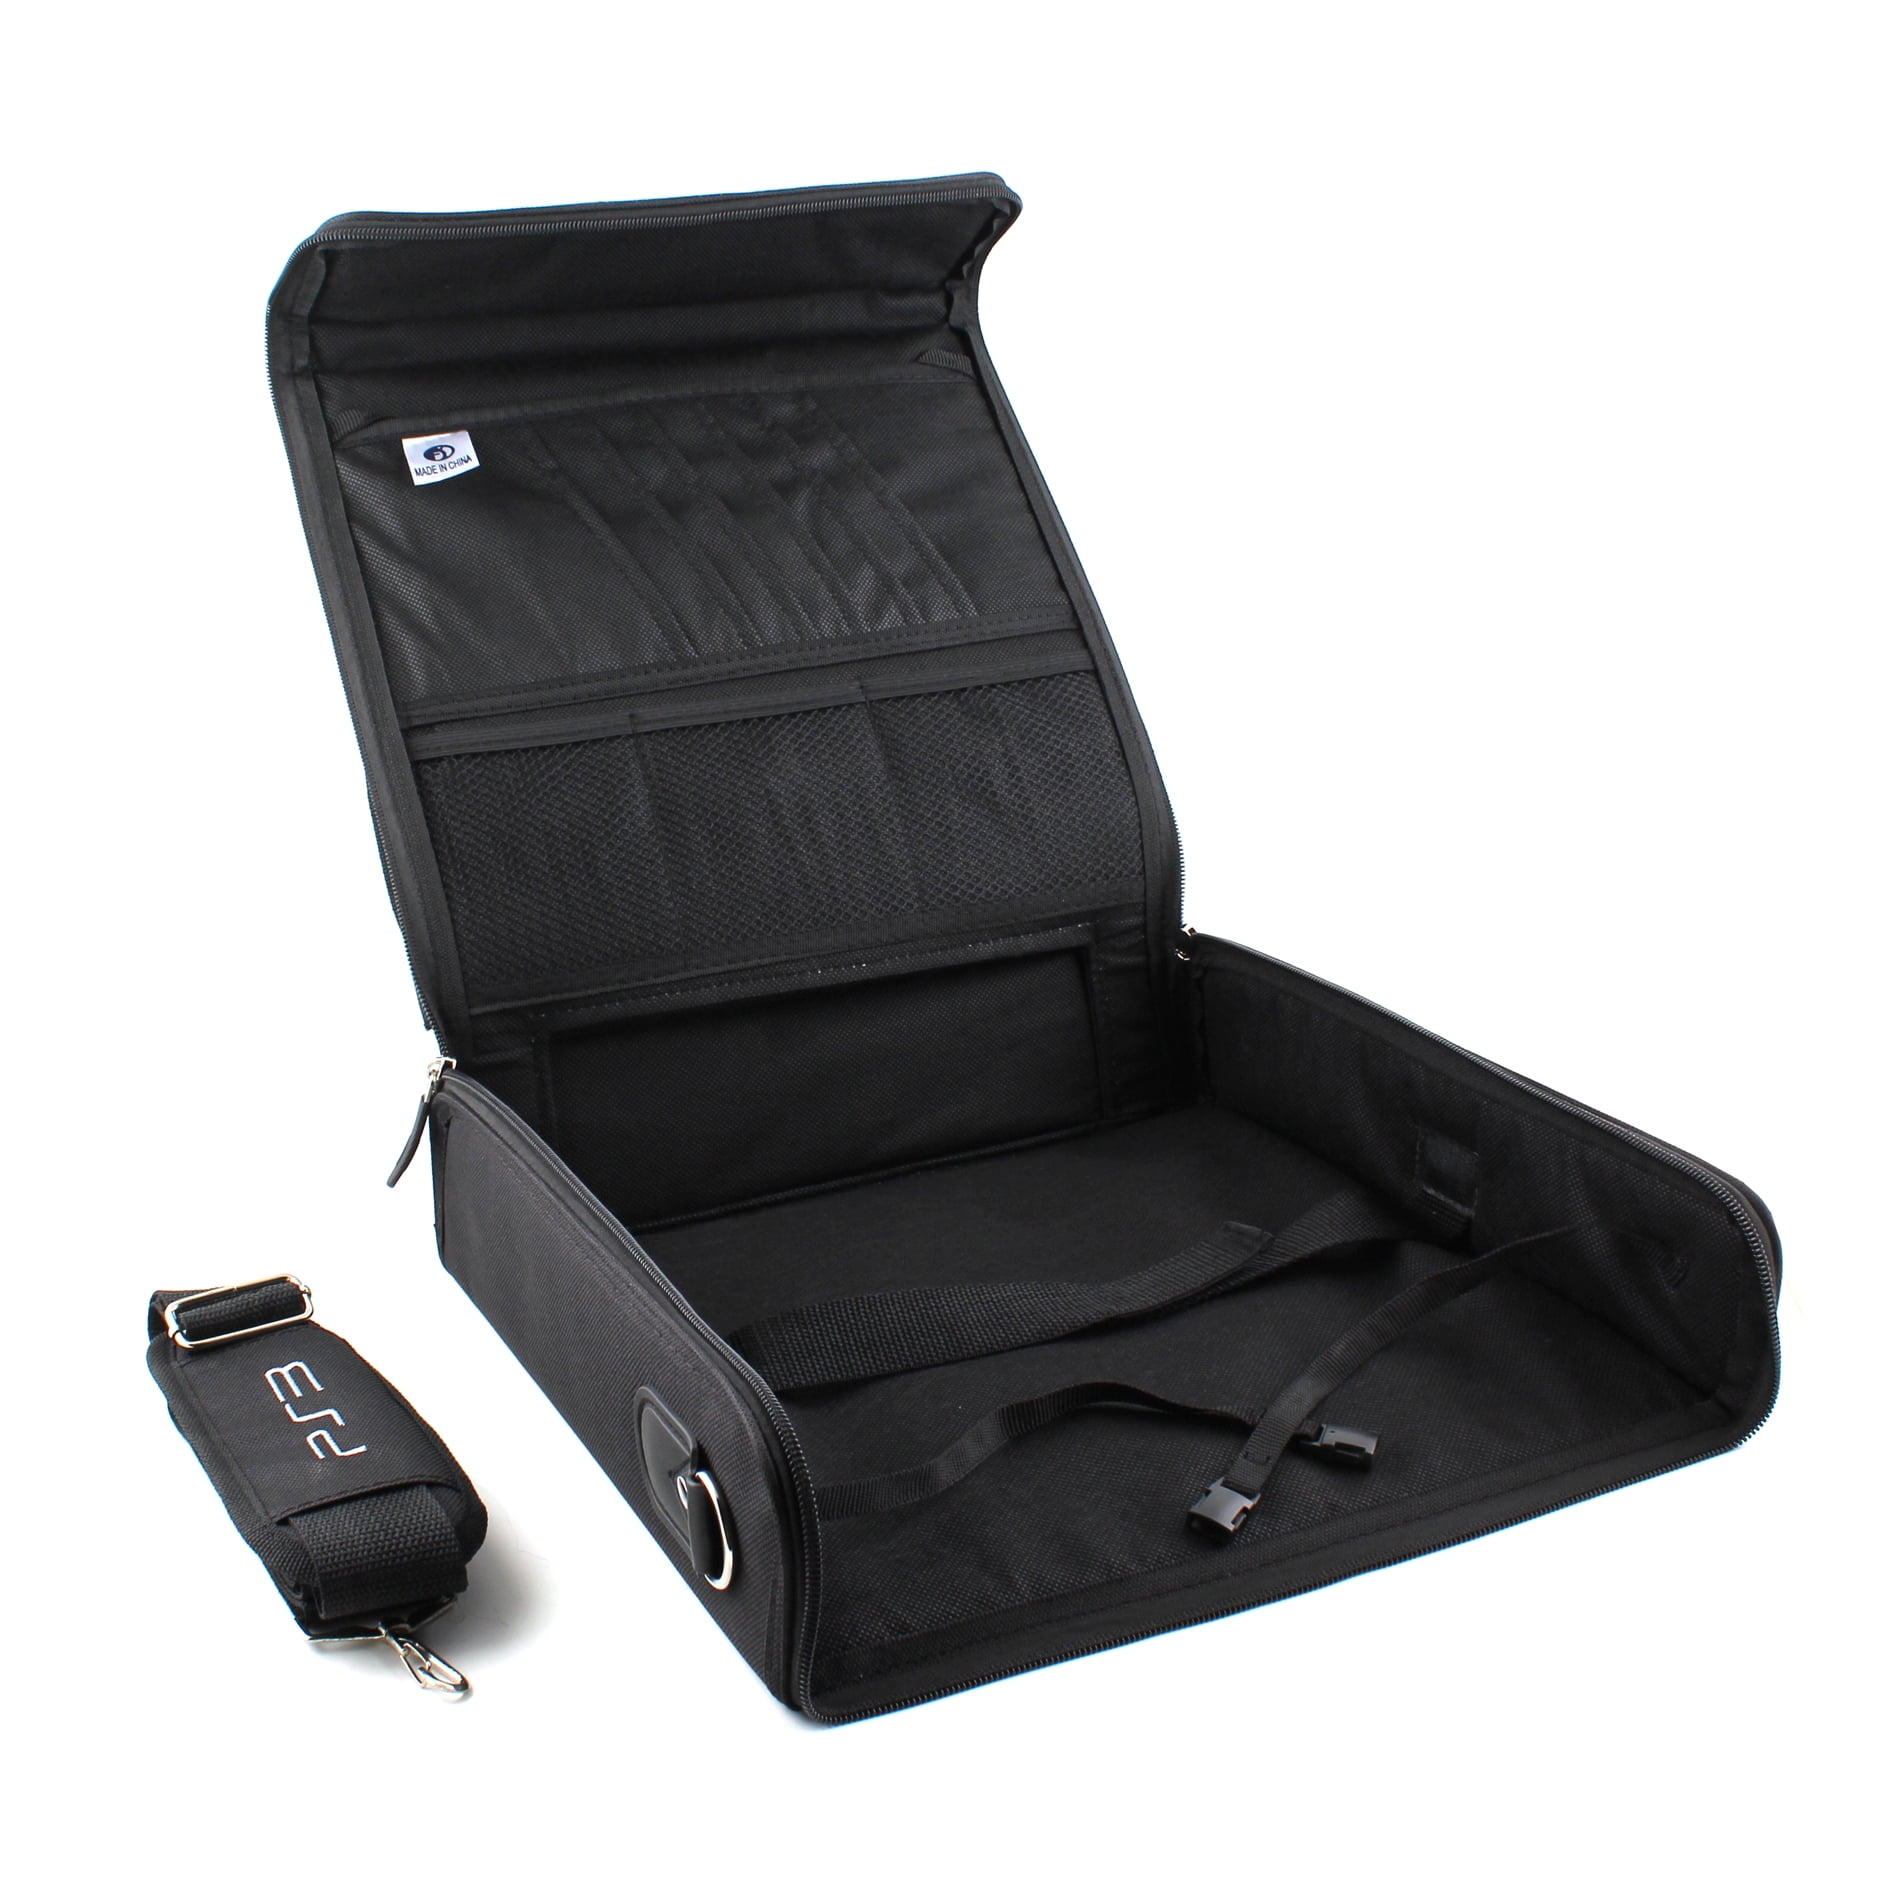 Sony Playstation 3 Backpack Black Nylon PS3 Storage Travel Bag Carrying Case  | eBay